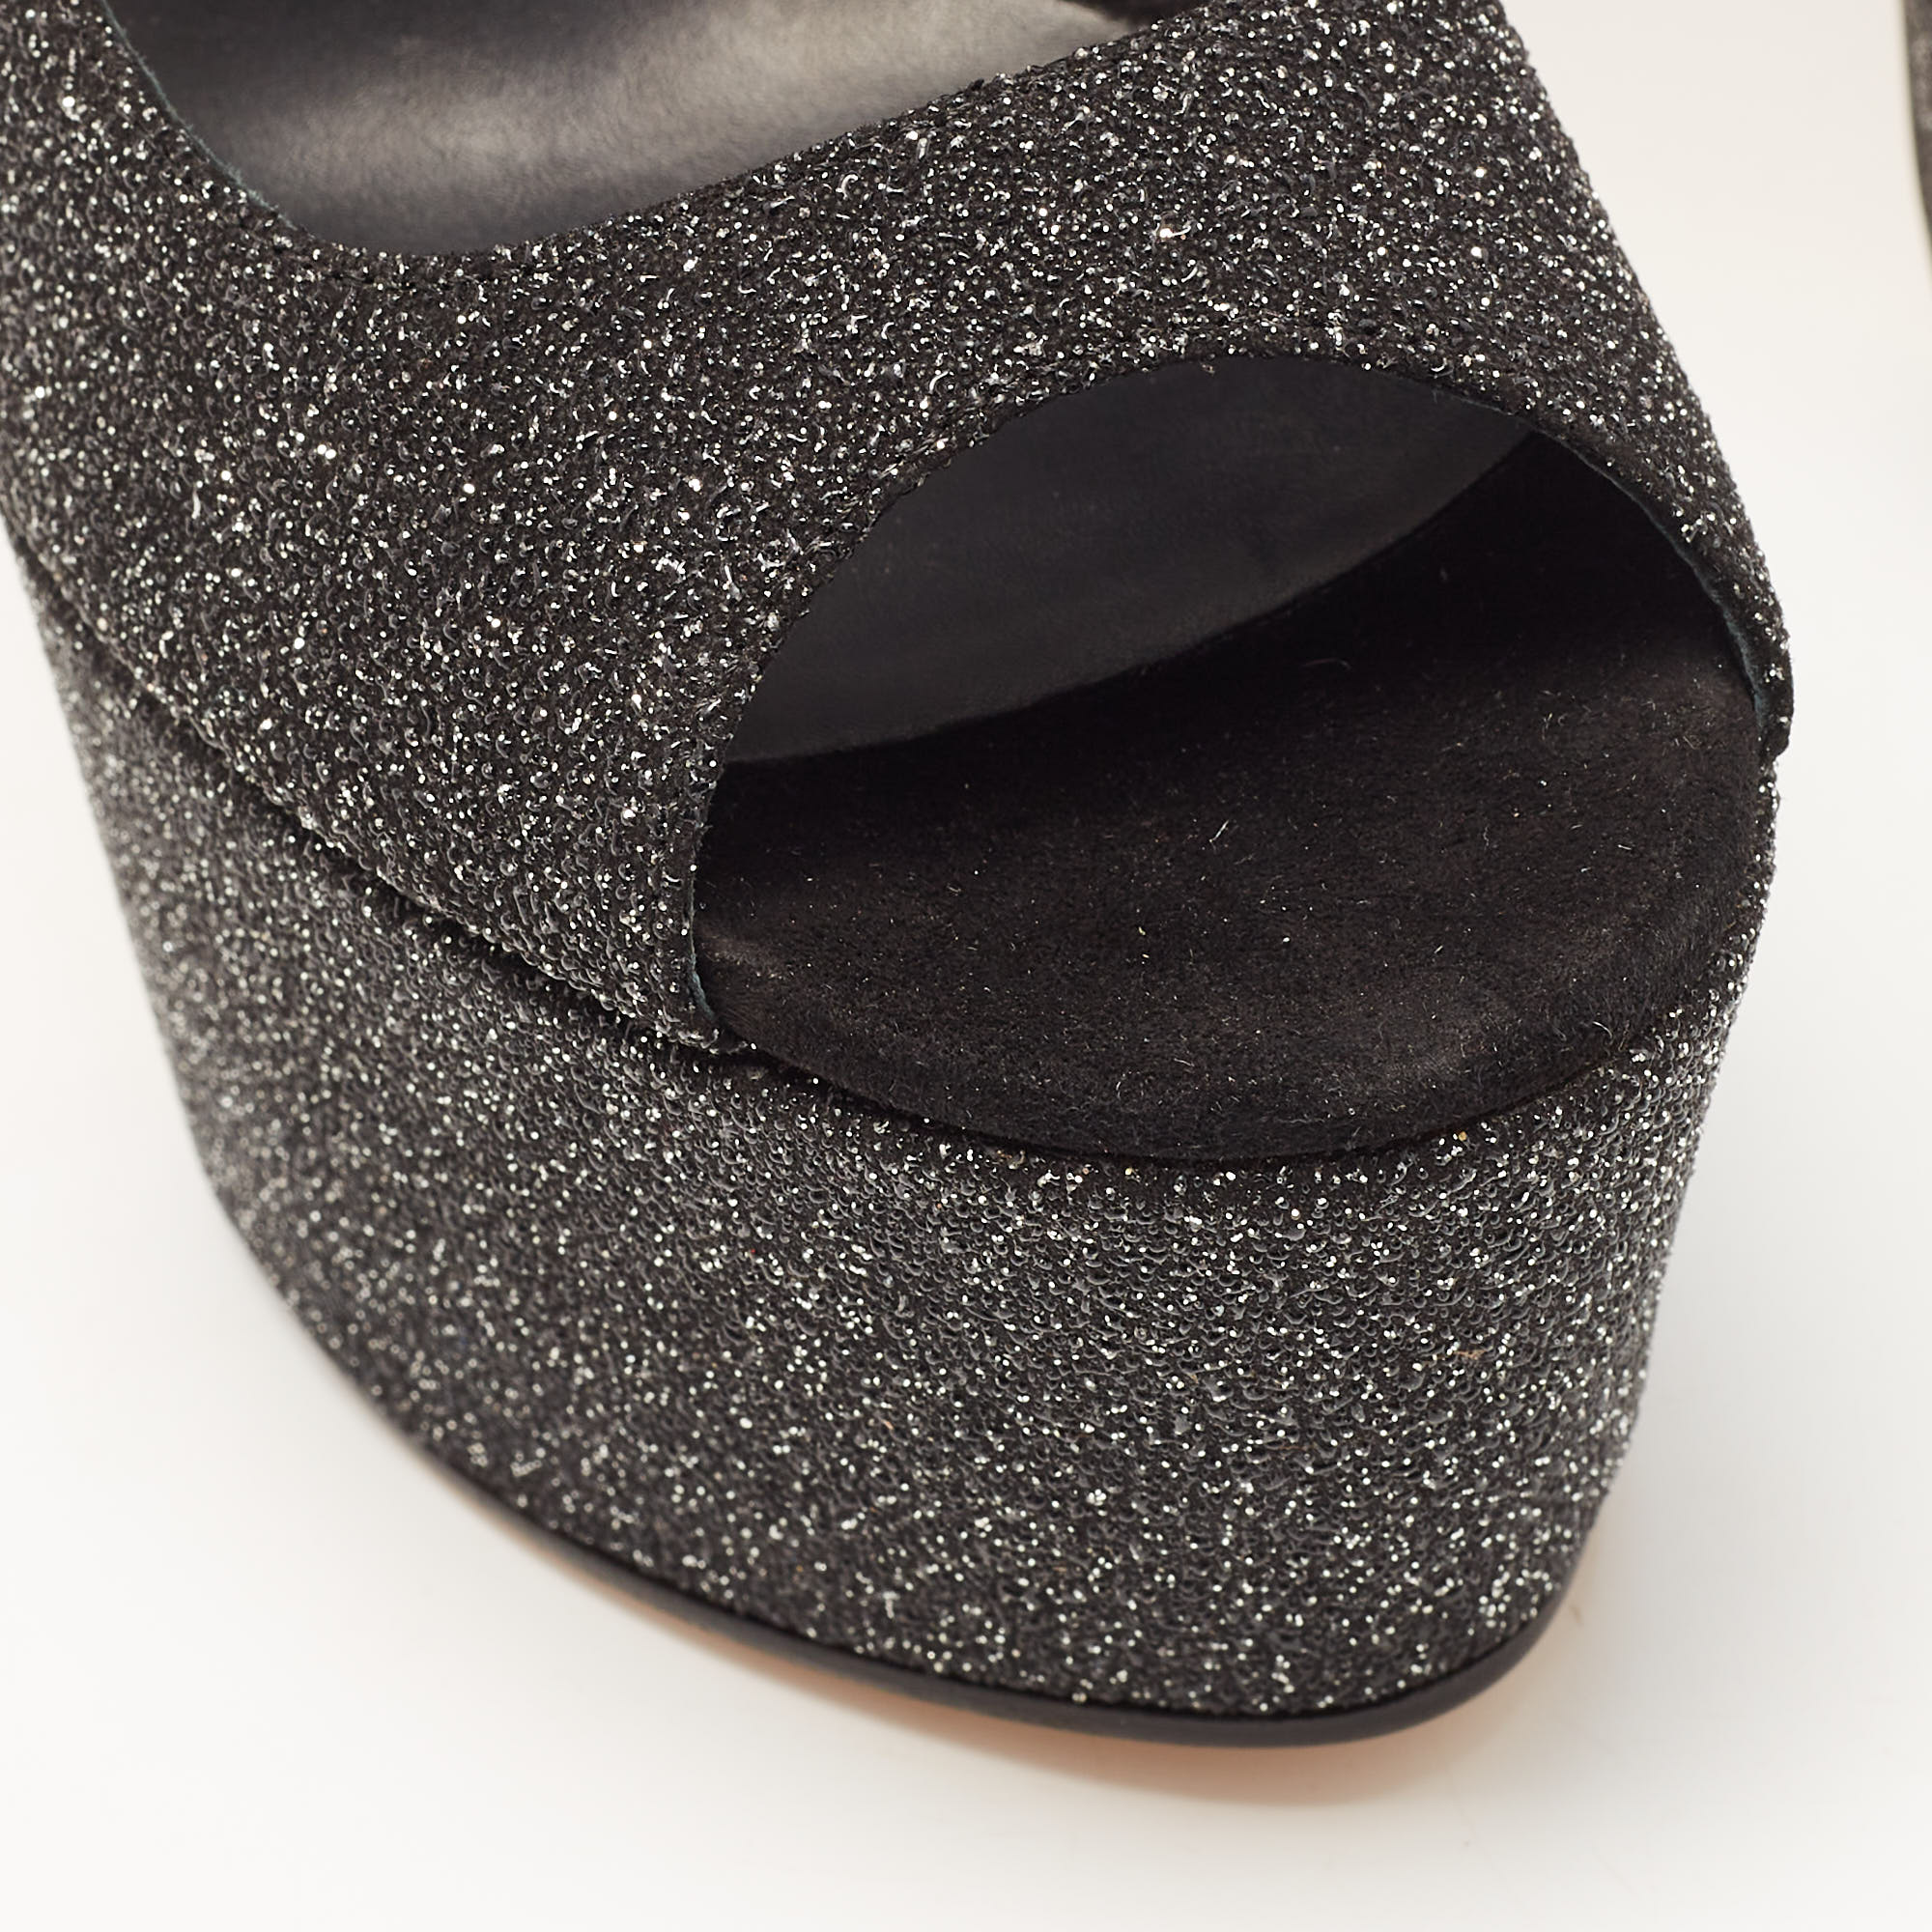 Giuseppe Zanotti Black Glittered Suede Open Toe Platform Pumps Size 39.5